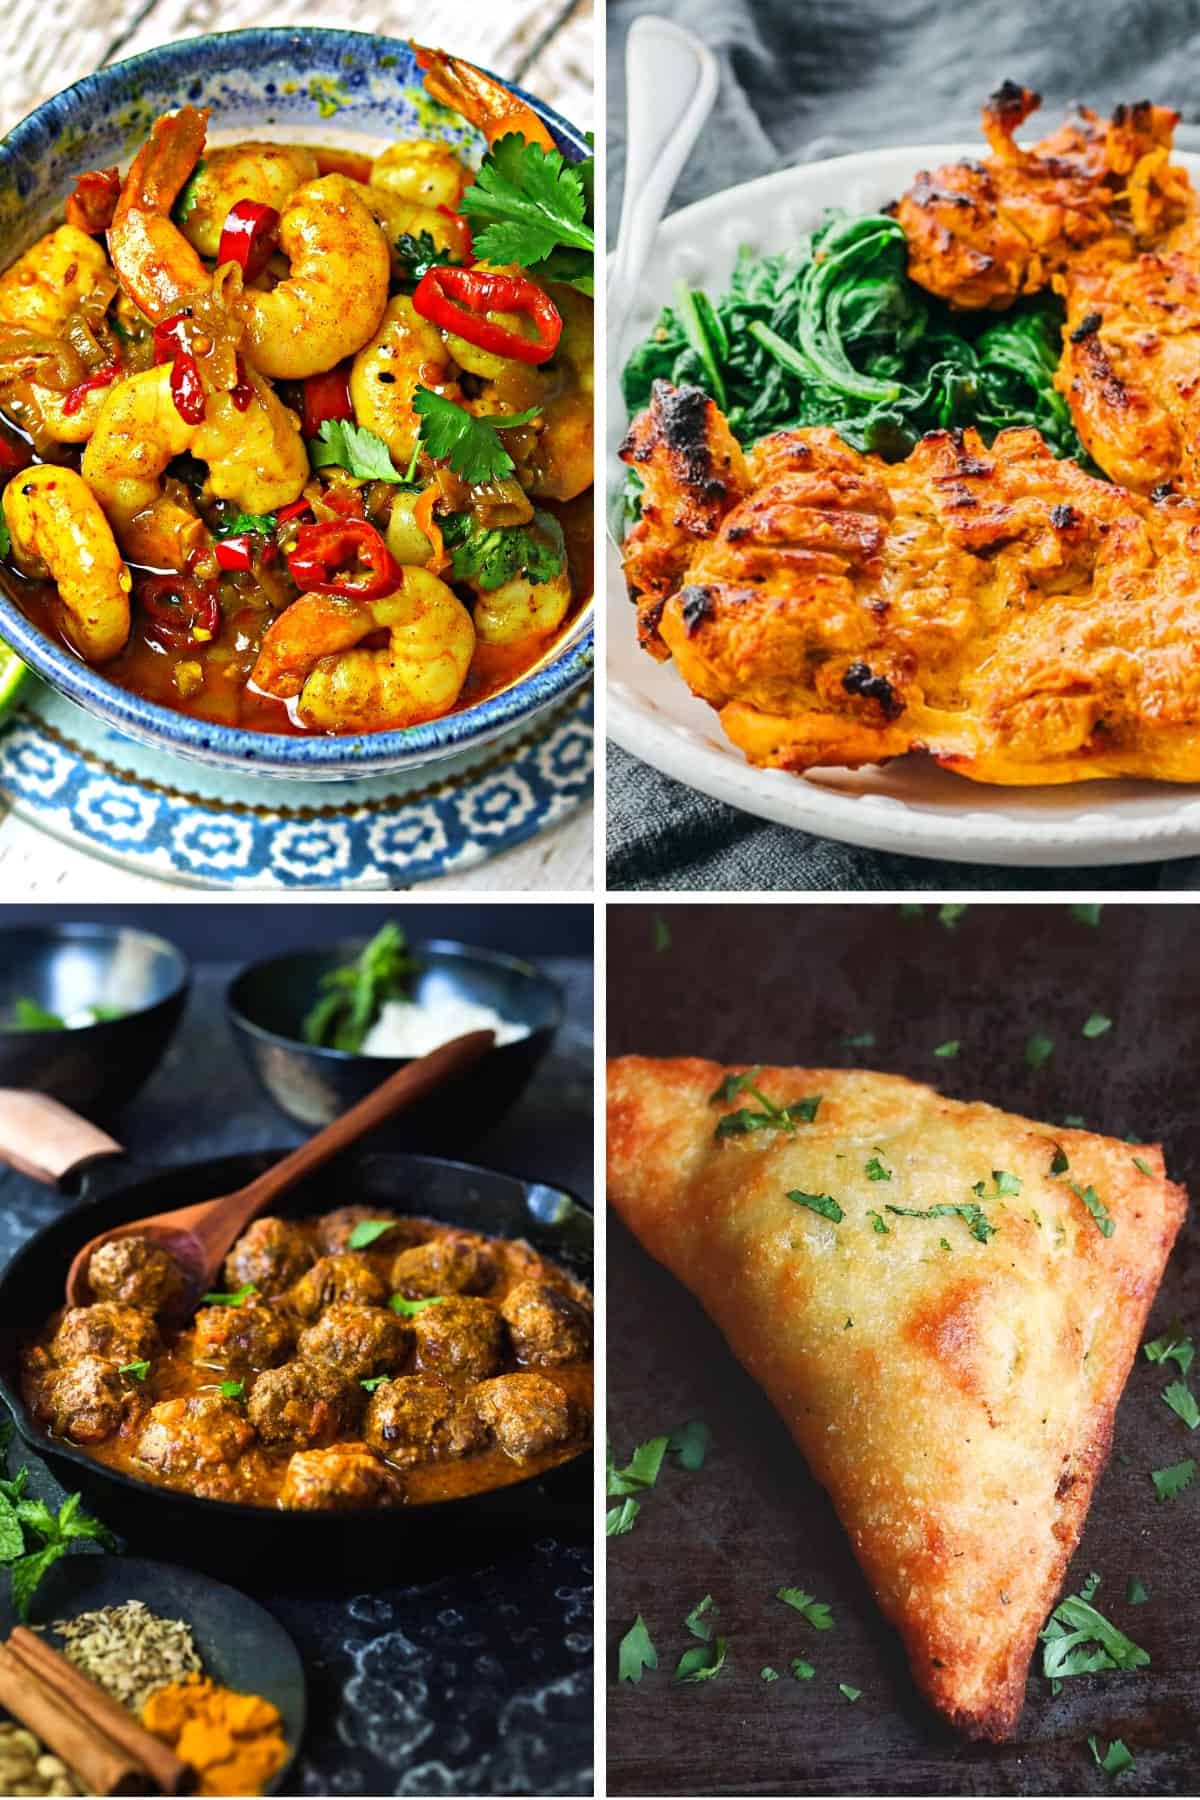 keto Indian food recipes like curry meatballs, tandoori chicken, shrimp curry, and vegetable samosas